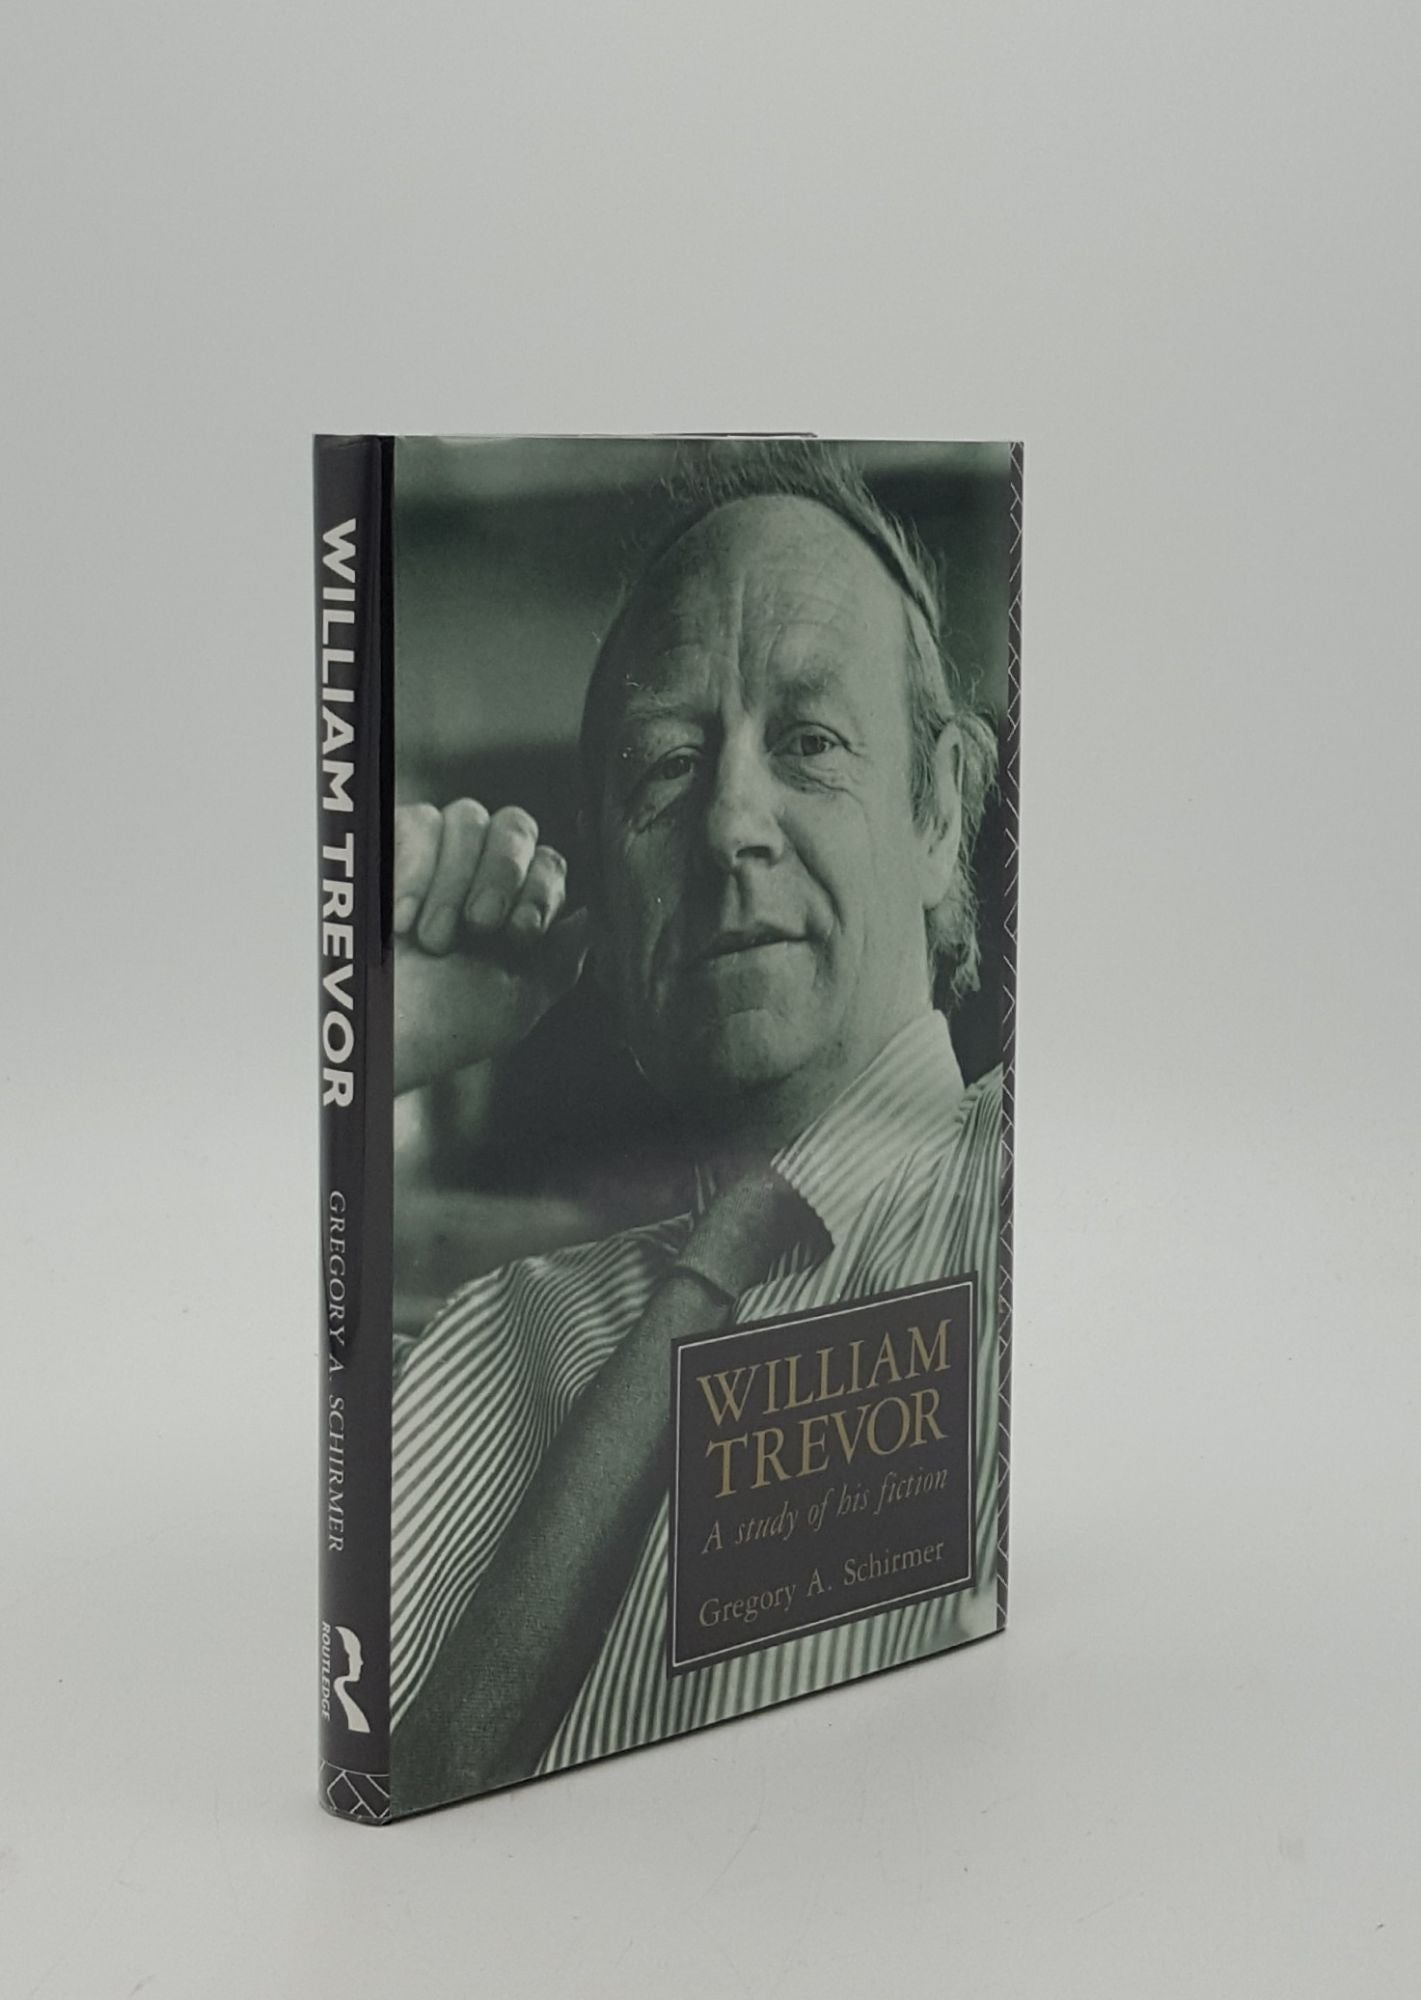 SCHIRMER Gregory A. - William Trevor a Study of His Fiction